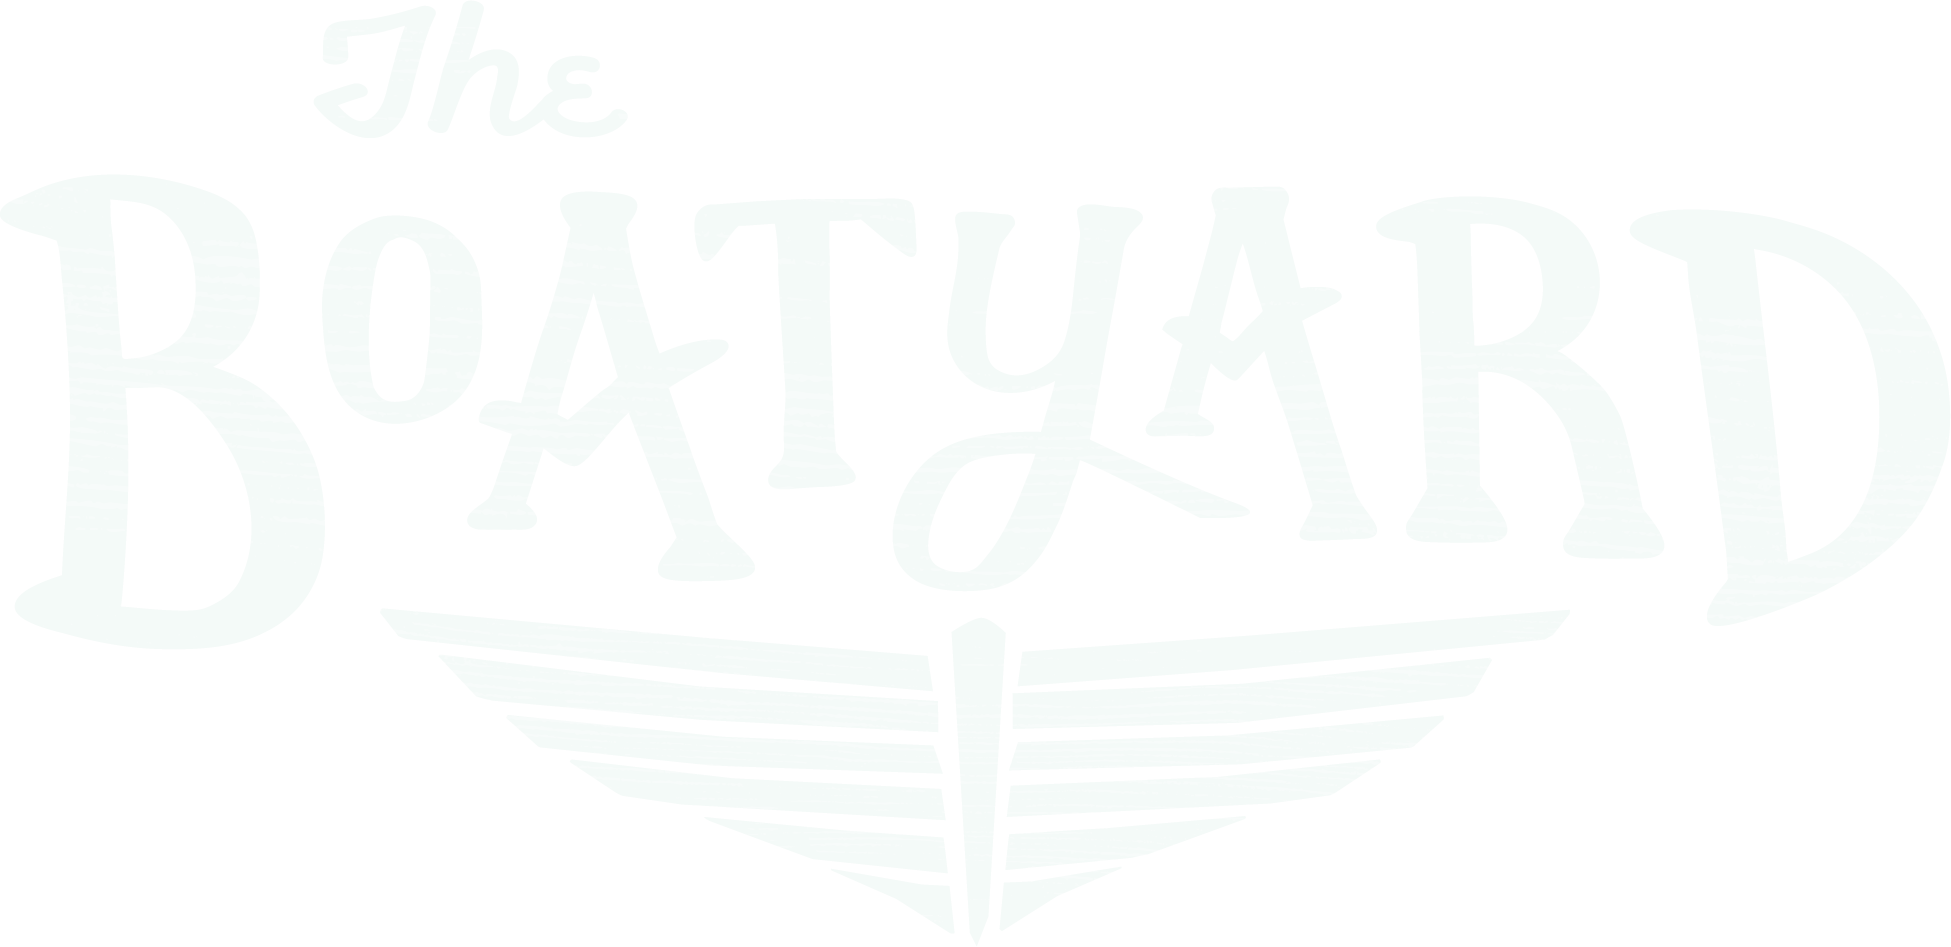 Boatyard Logo